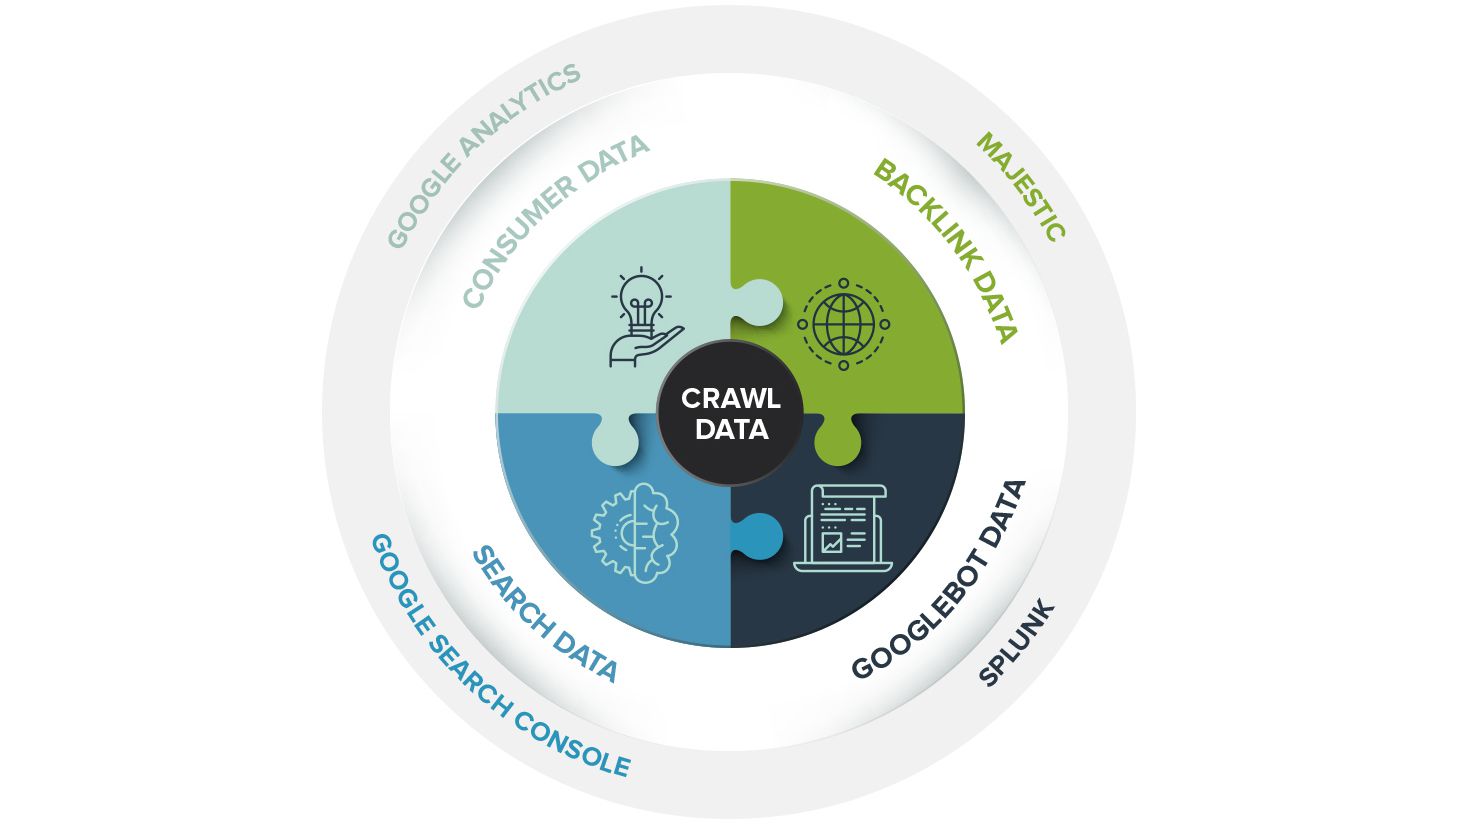 Crawl data sources